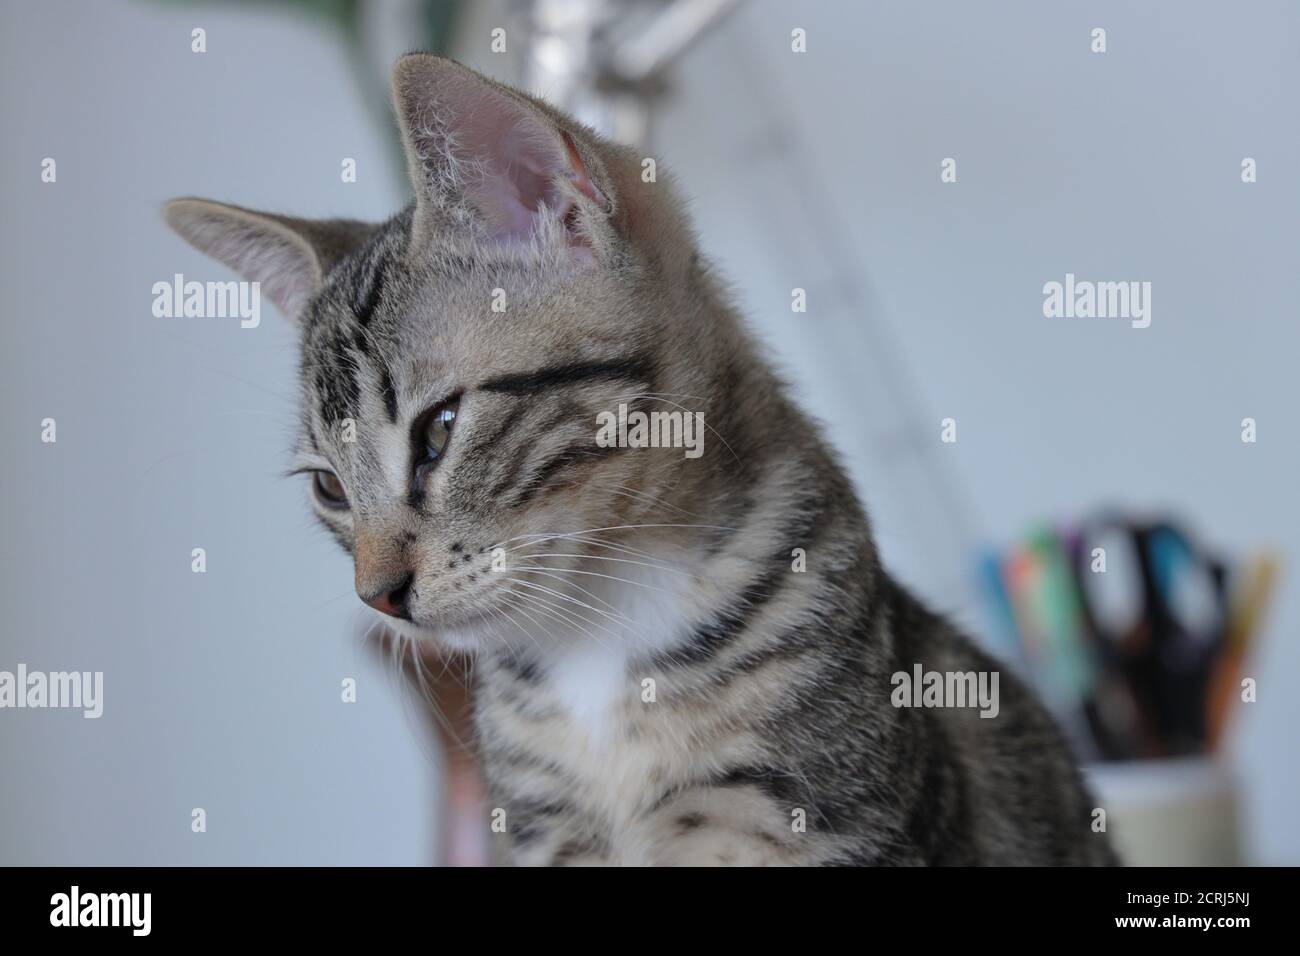 Closeup of a little cat Stock Photo